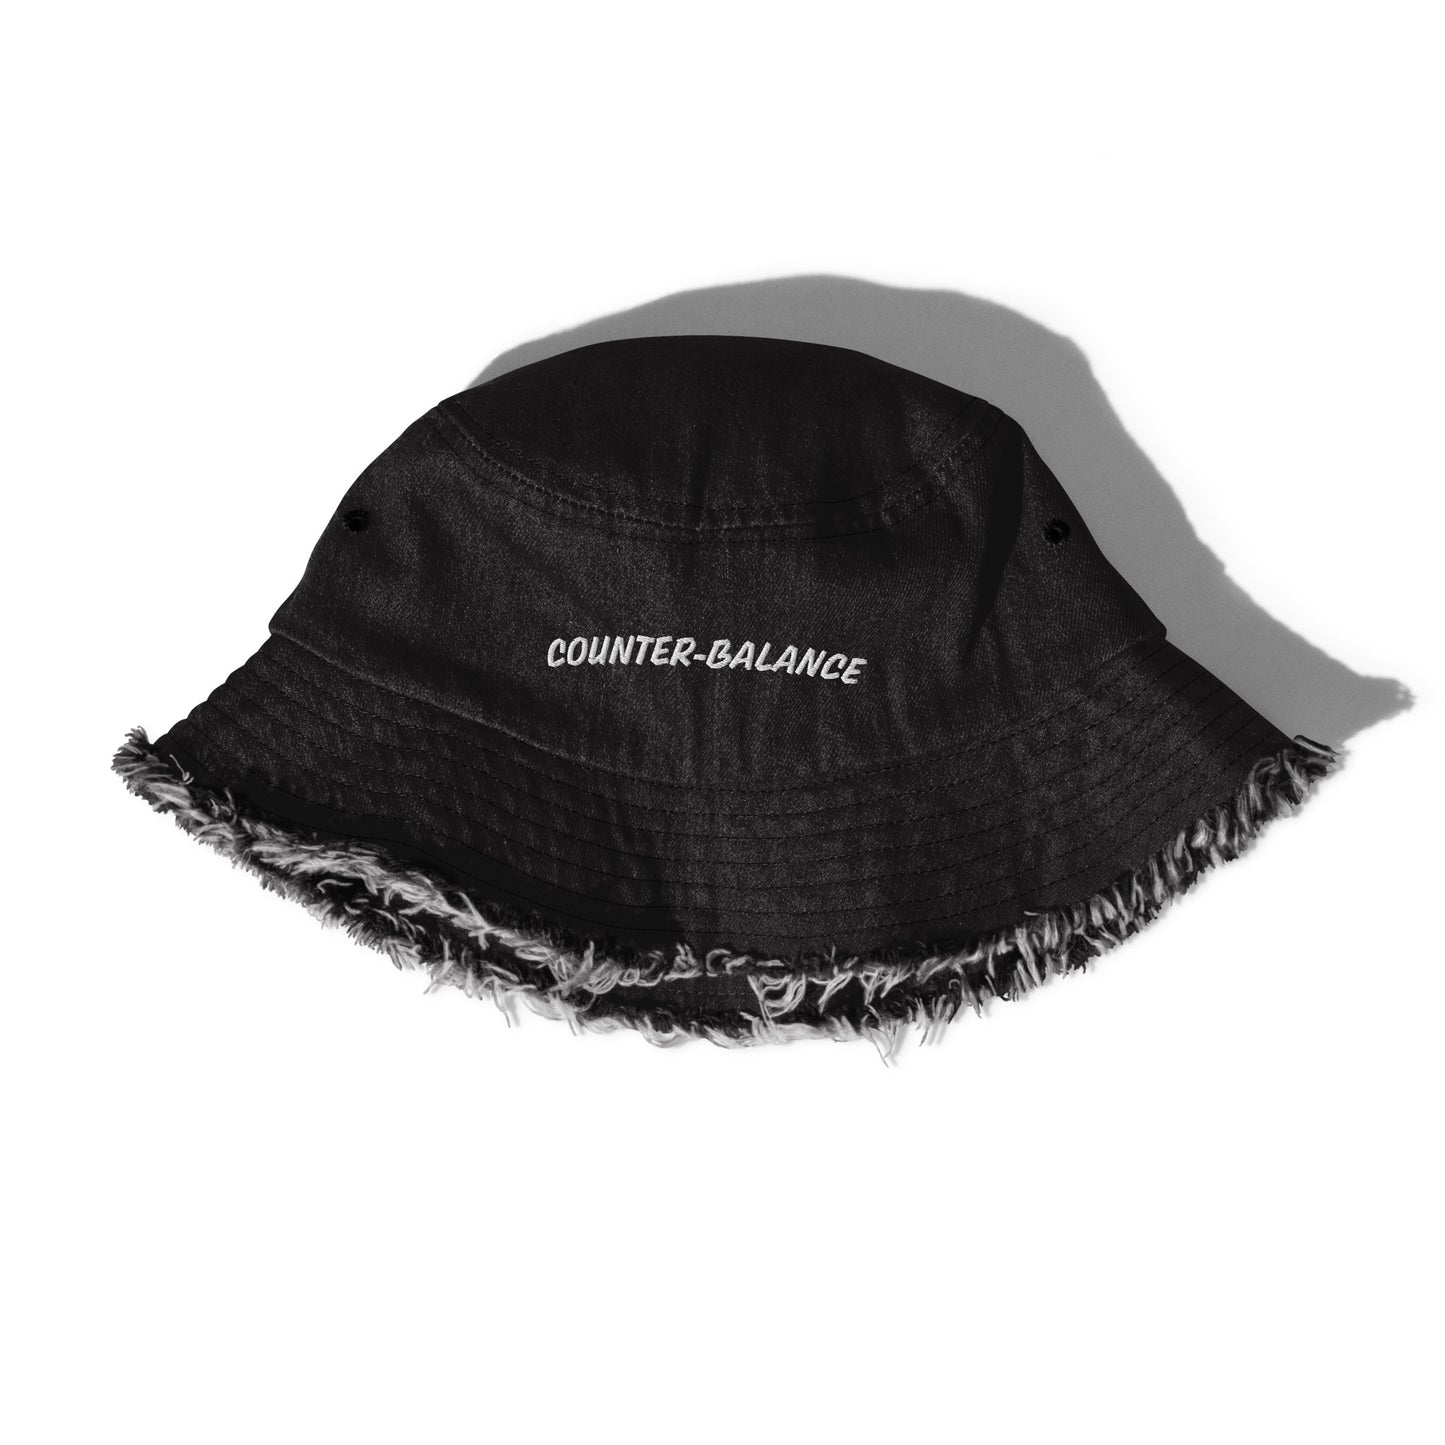 Y008 - Damaged denim bucket hat (black)